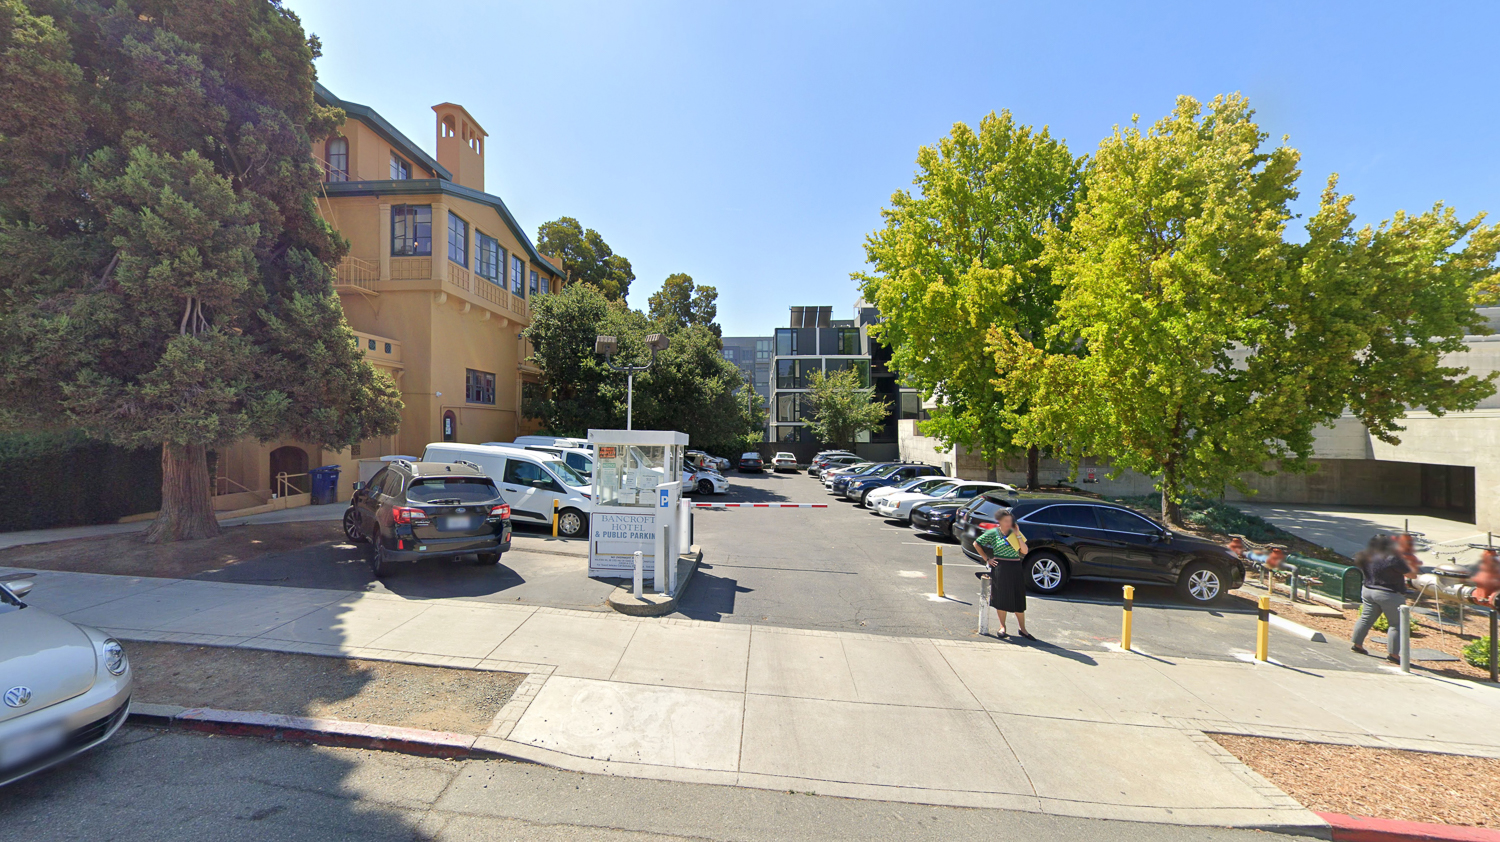 2660 Bancroft Way, image via Google Street View